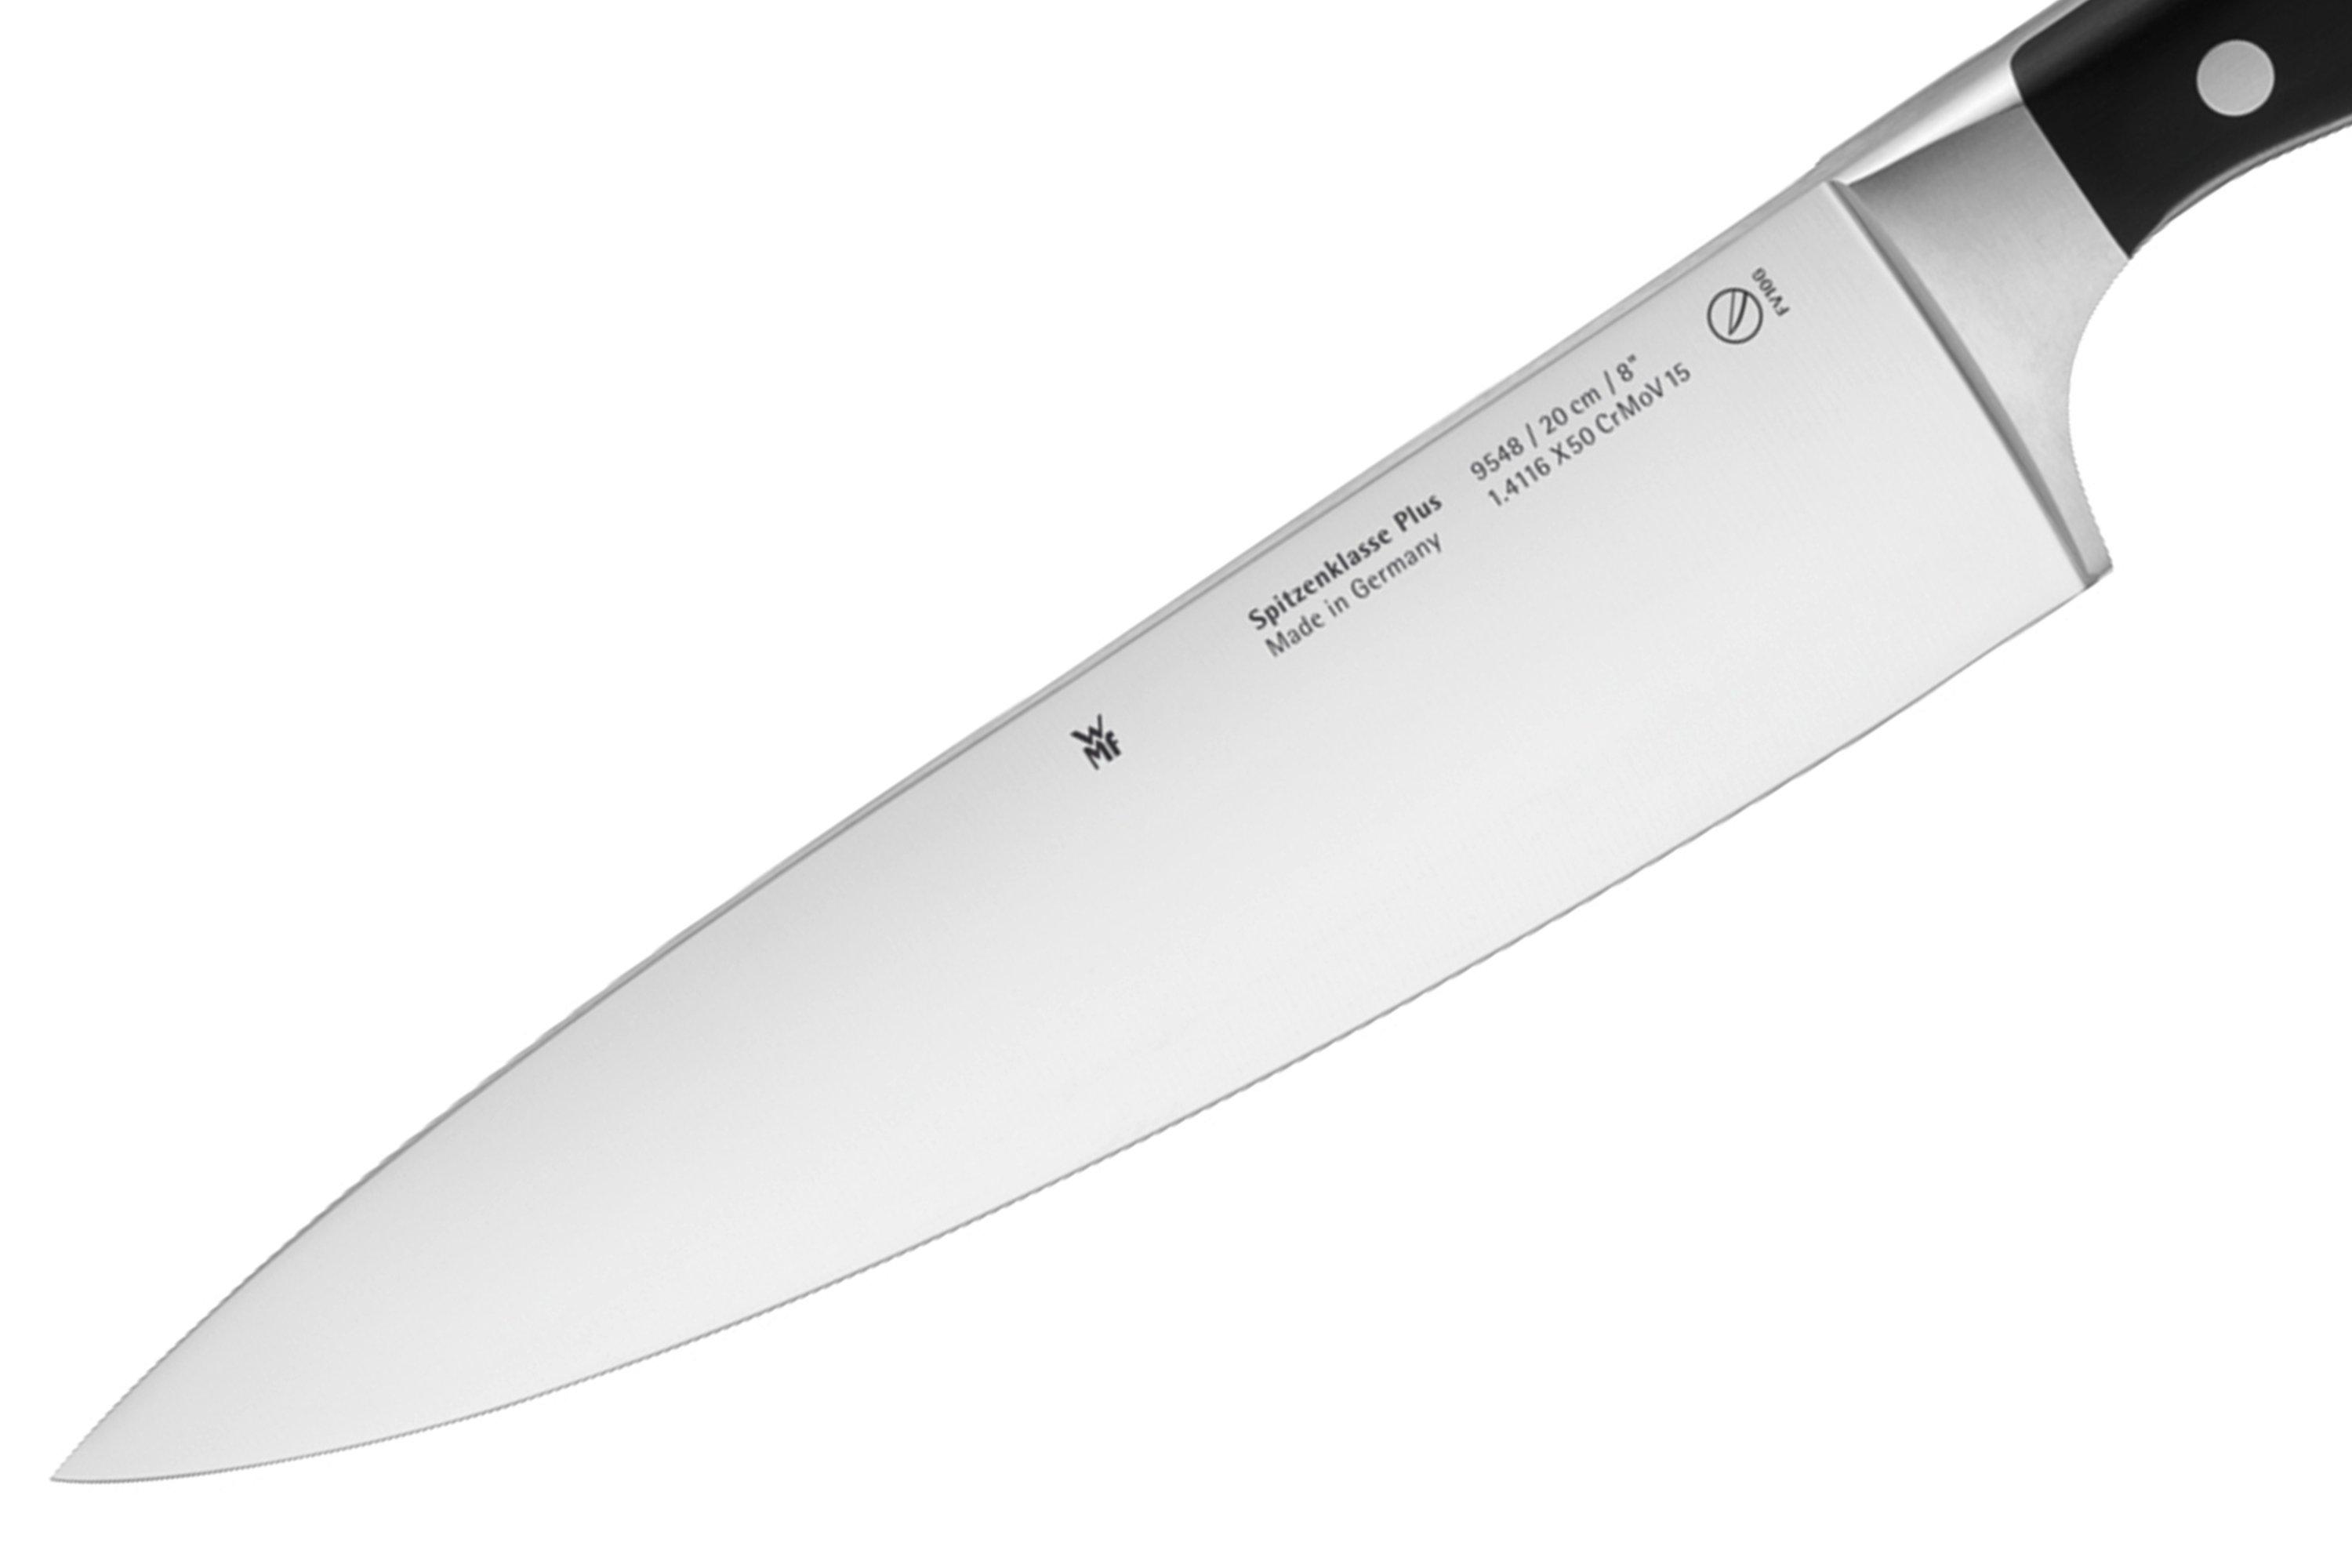 WMF Spitzenklasse Plus 1894919992, knife Advantageously at | set 3-piece shopping